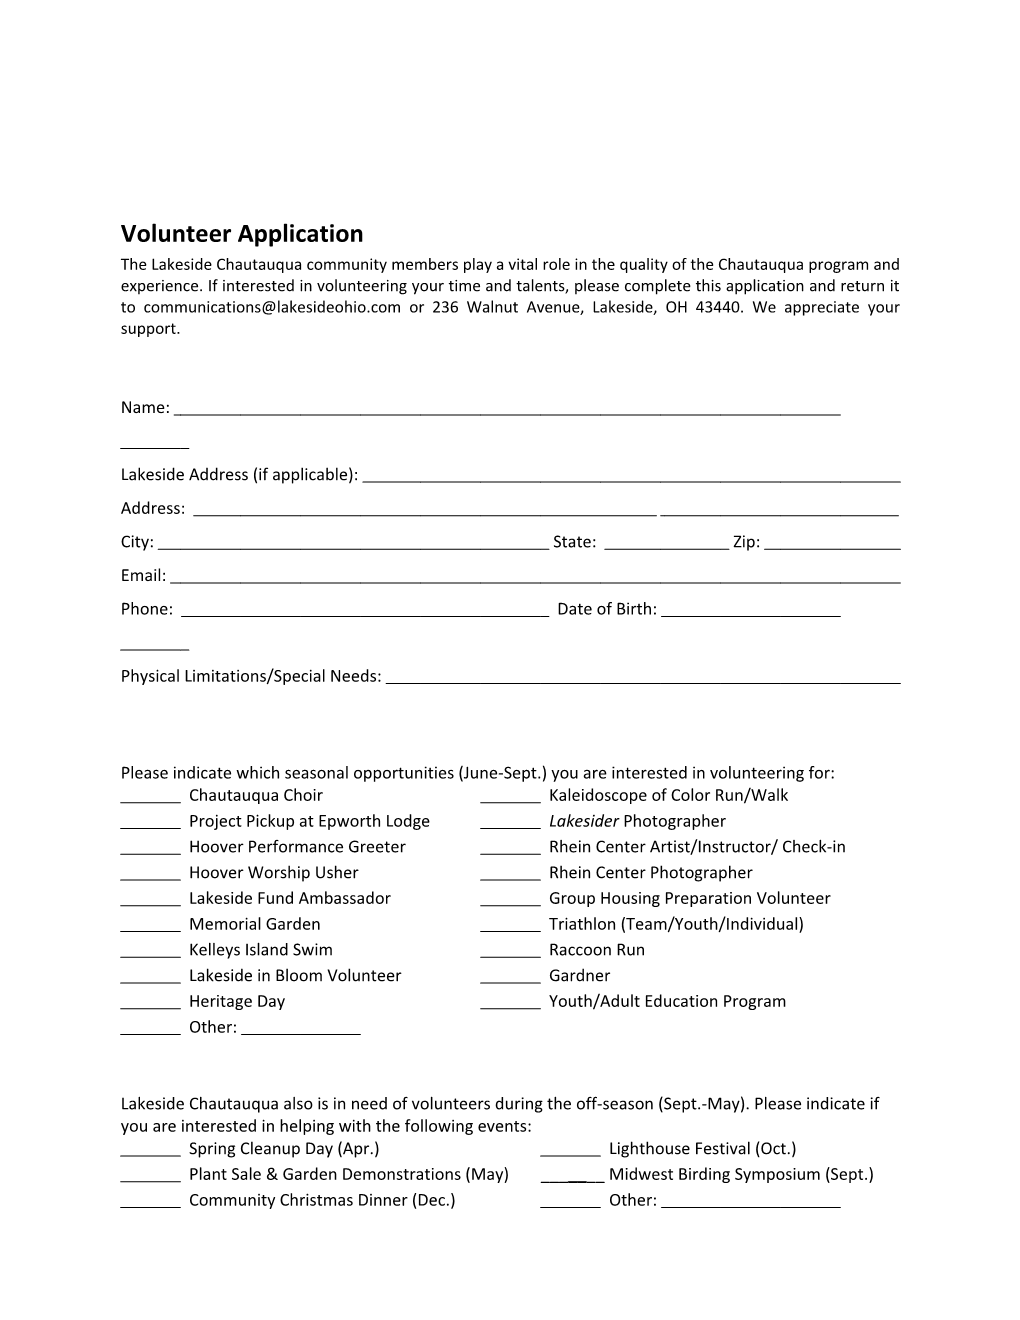 Volunteer Application s3